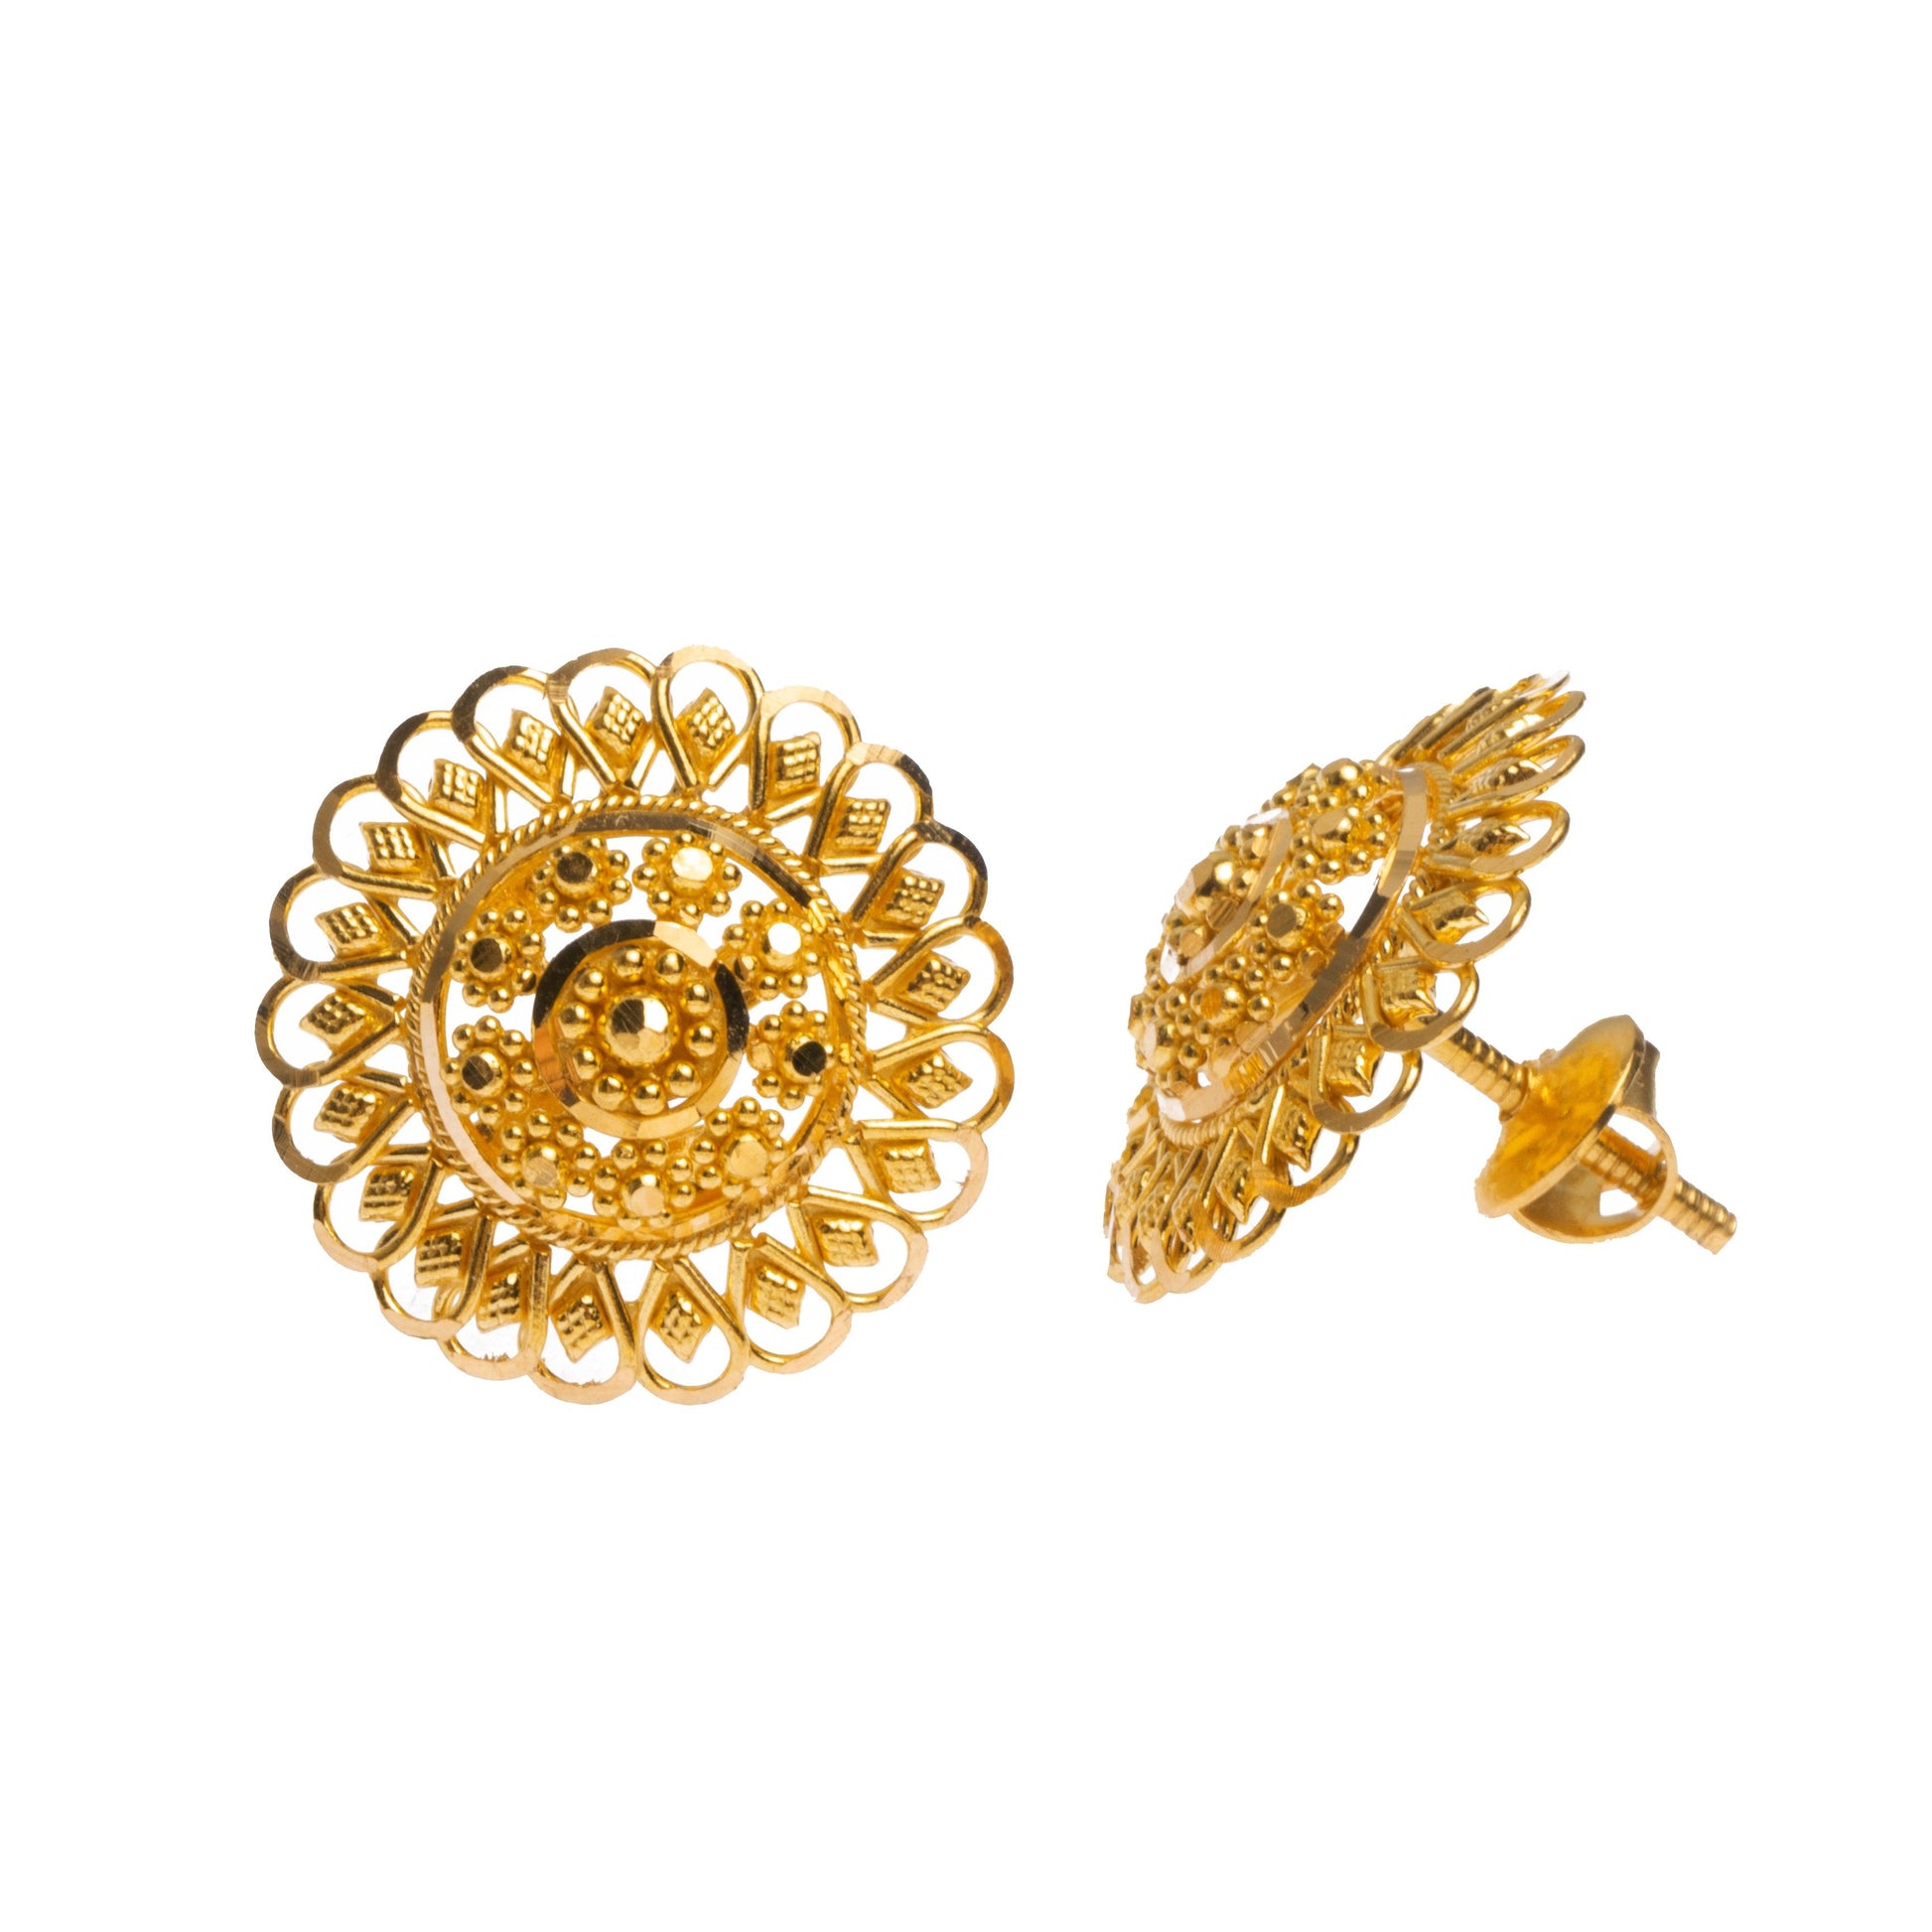 jali filigree earrings in 22ct gold